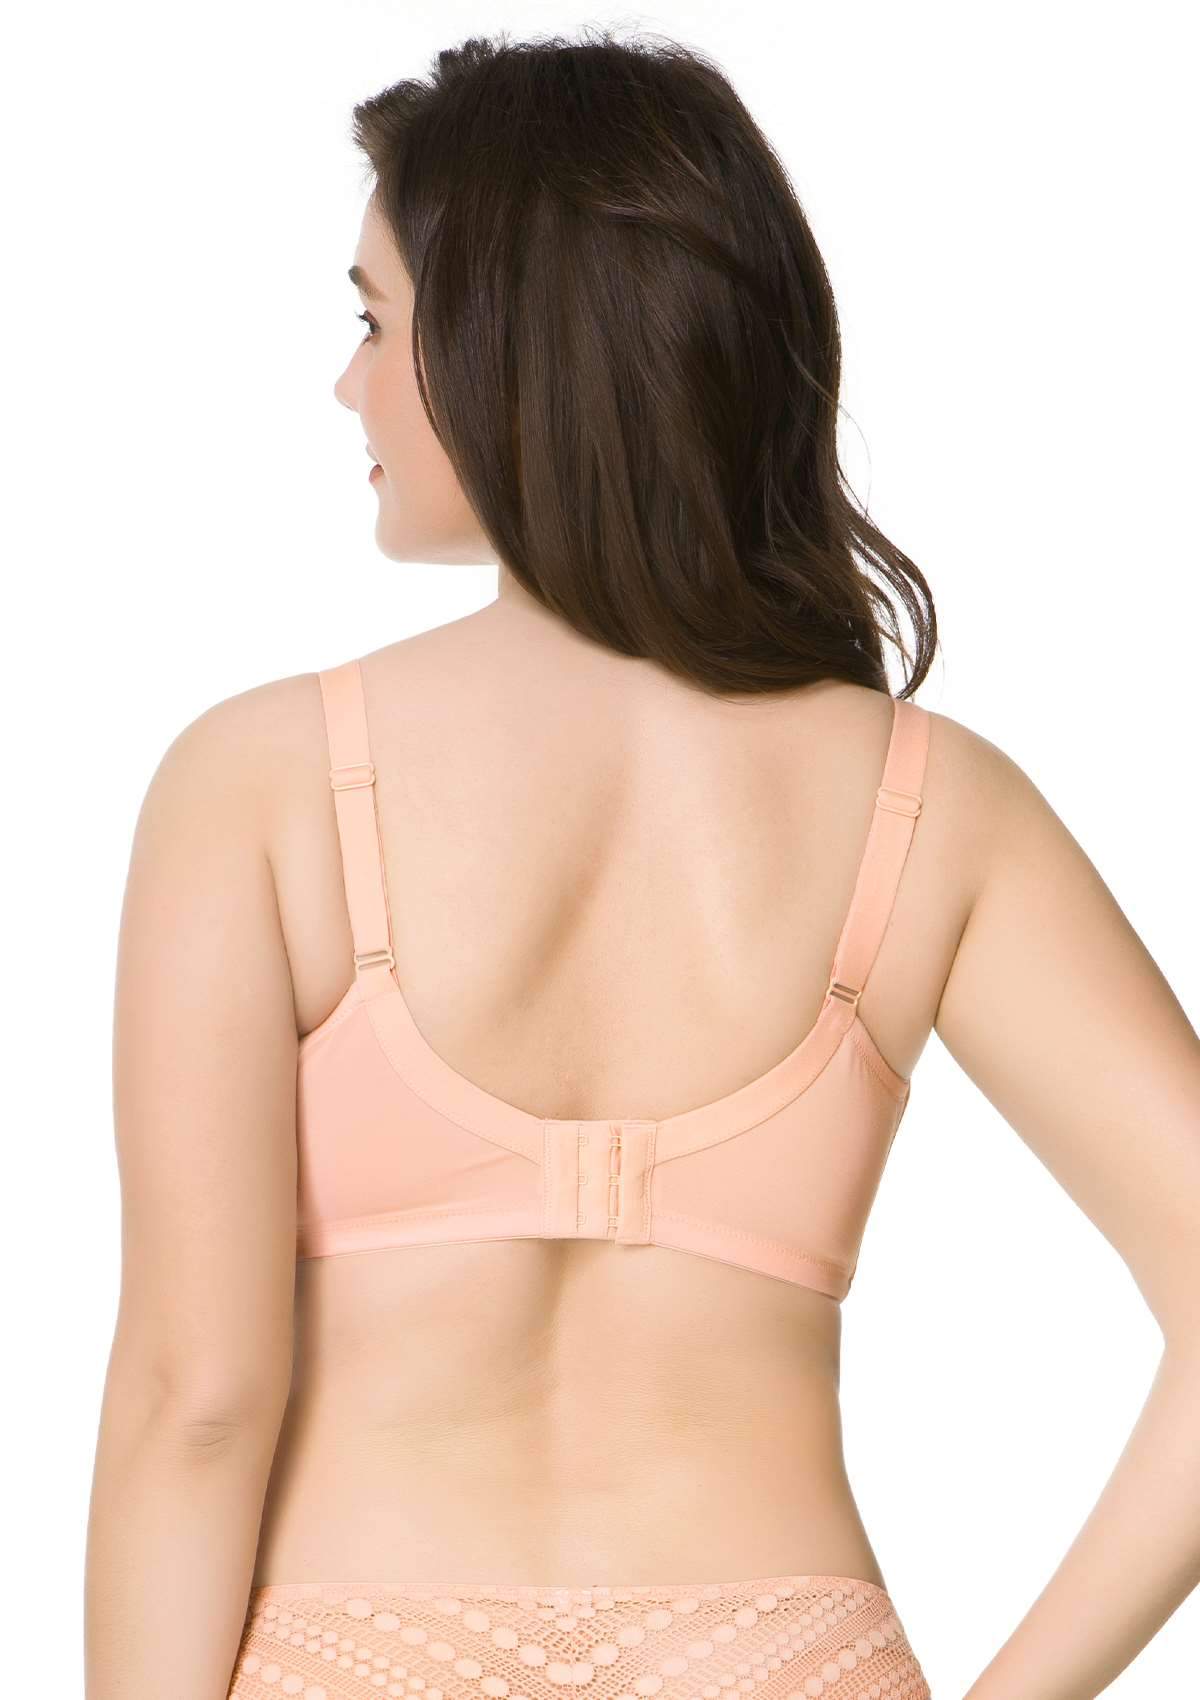 HSIA Heroine Lace Bra And Panty: Best Full Figure Minimizer Bra - Rose Cloud / 44 / D